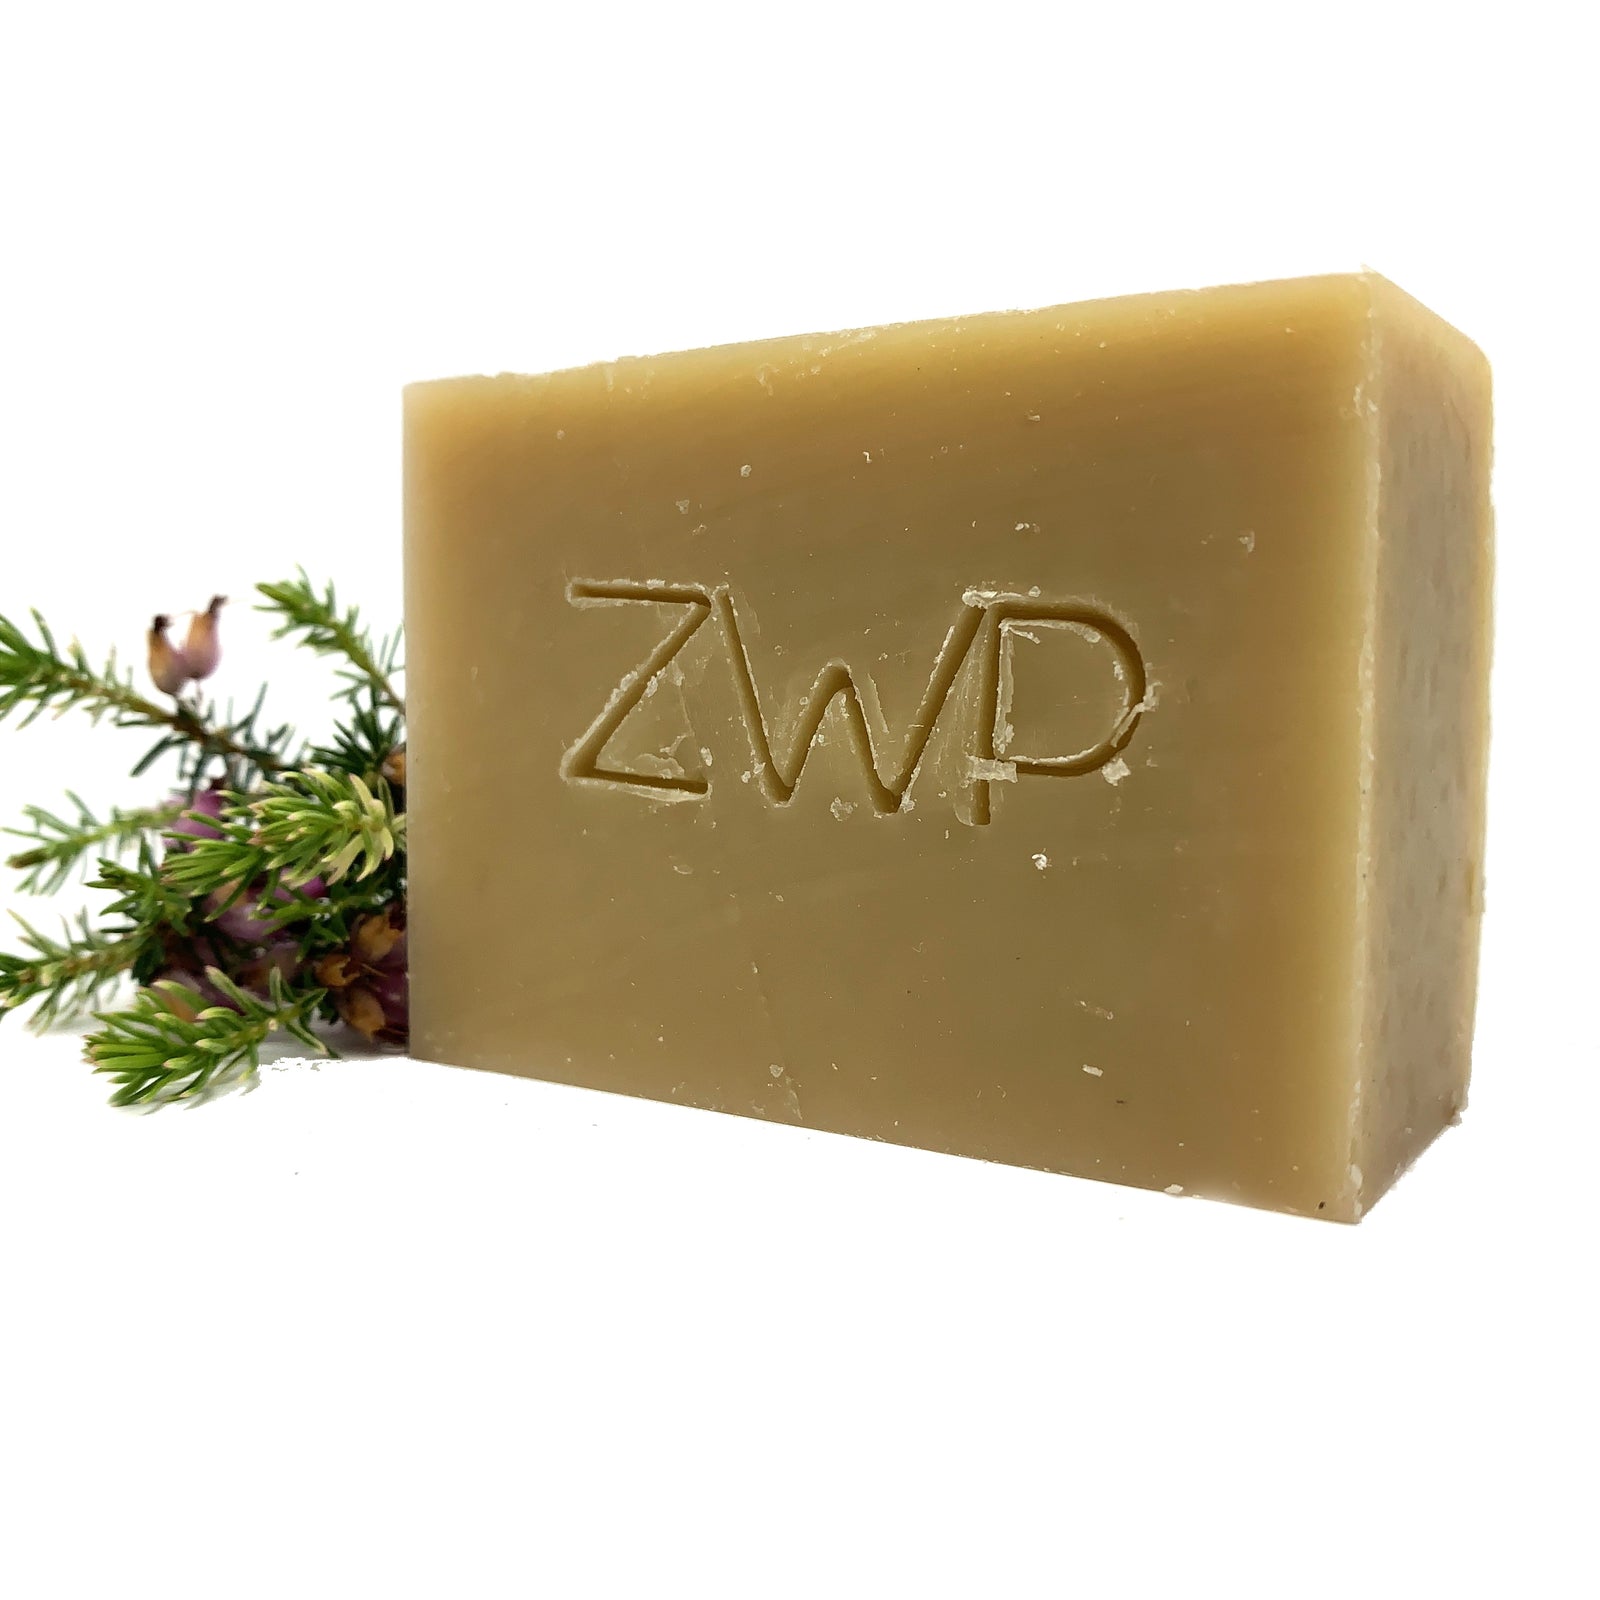 details Dhr Collega Natural Shampoo & Soap - eco friendly, vegan, organic that smell fresh